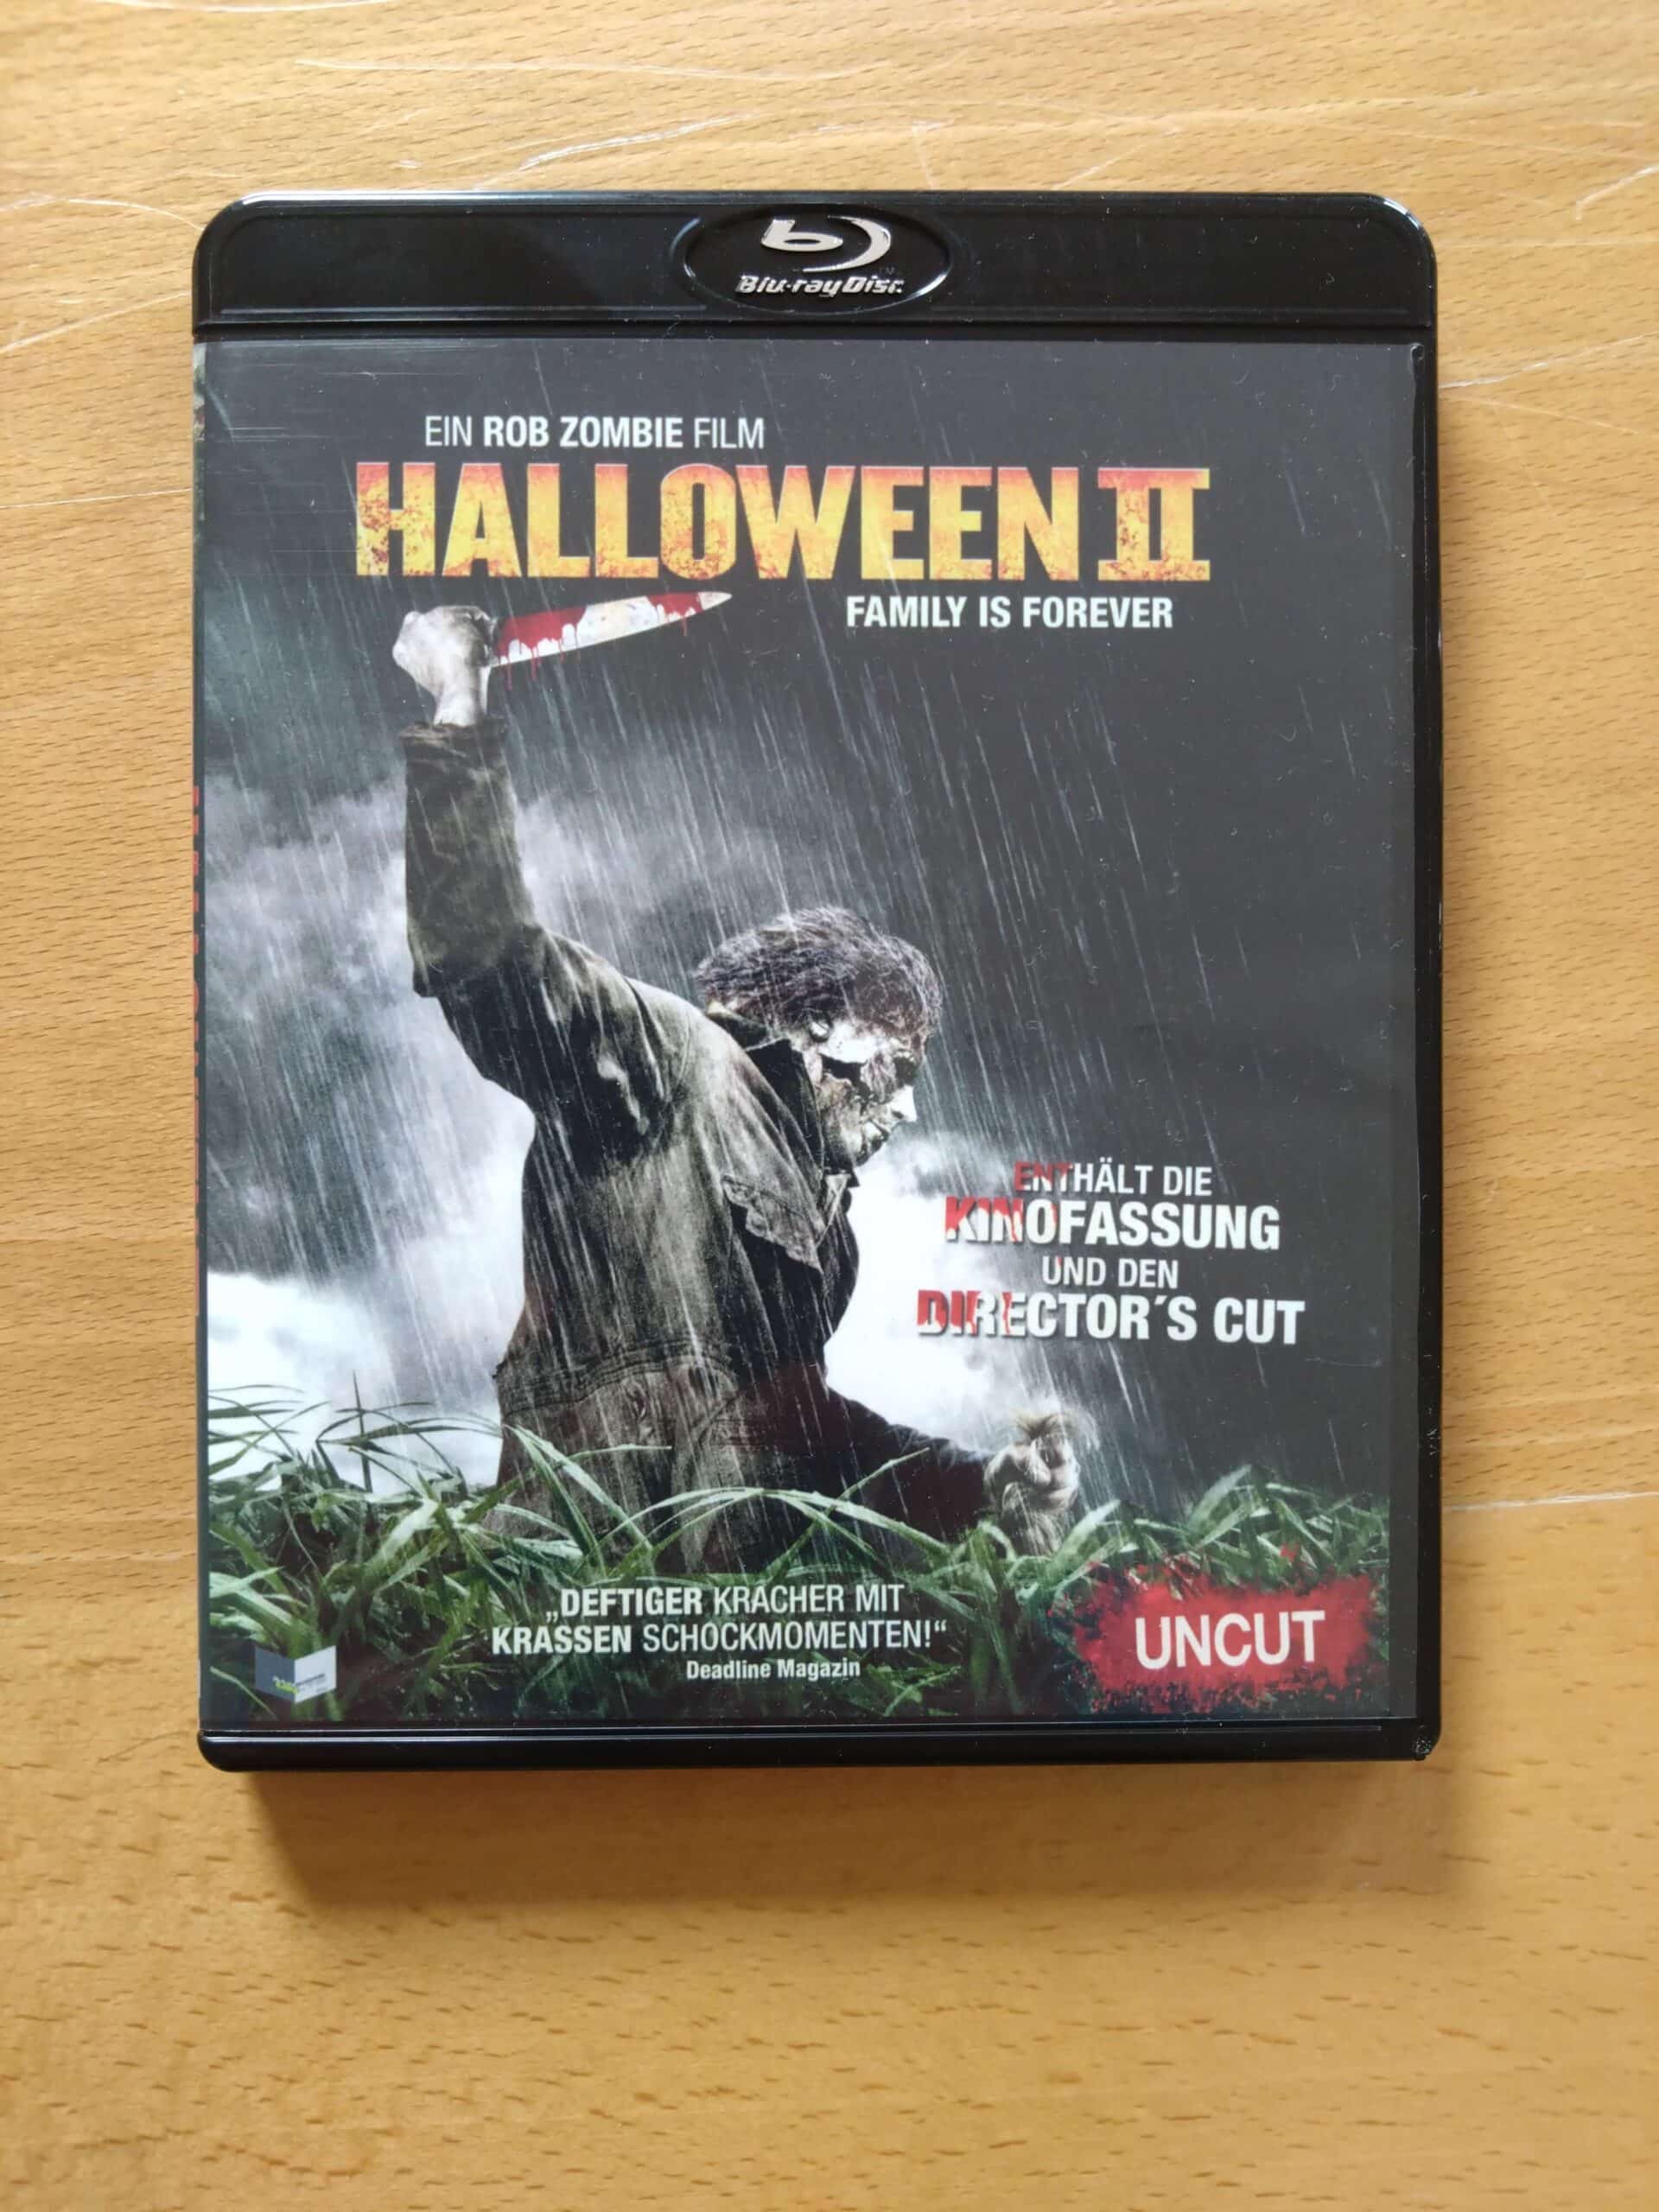 [Review] Halloween II (2009) Blu-ray Amaray (Kinofassung + Director´s Cut) uncut